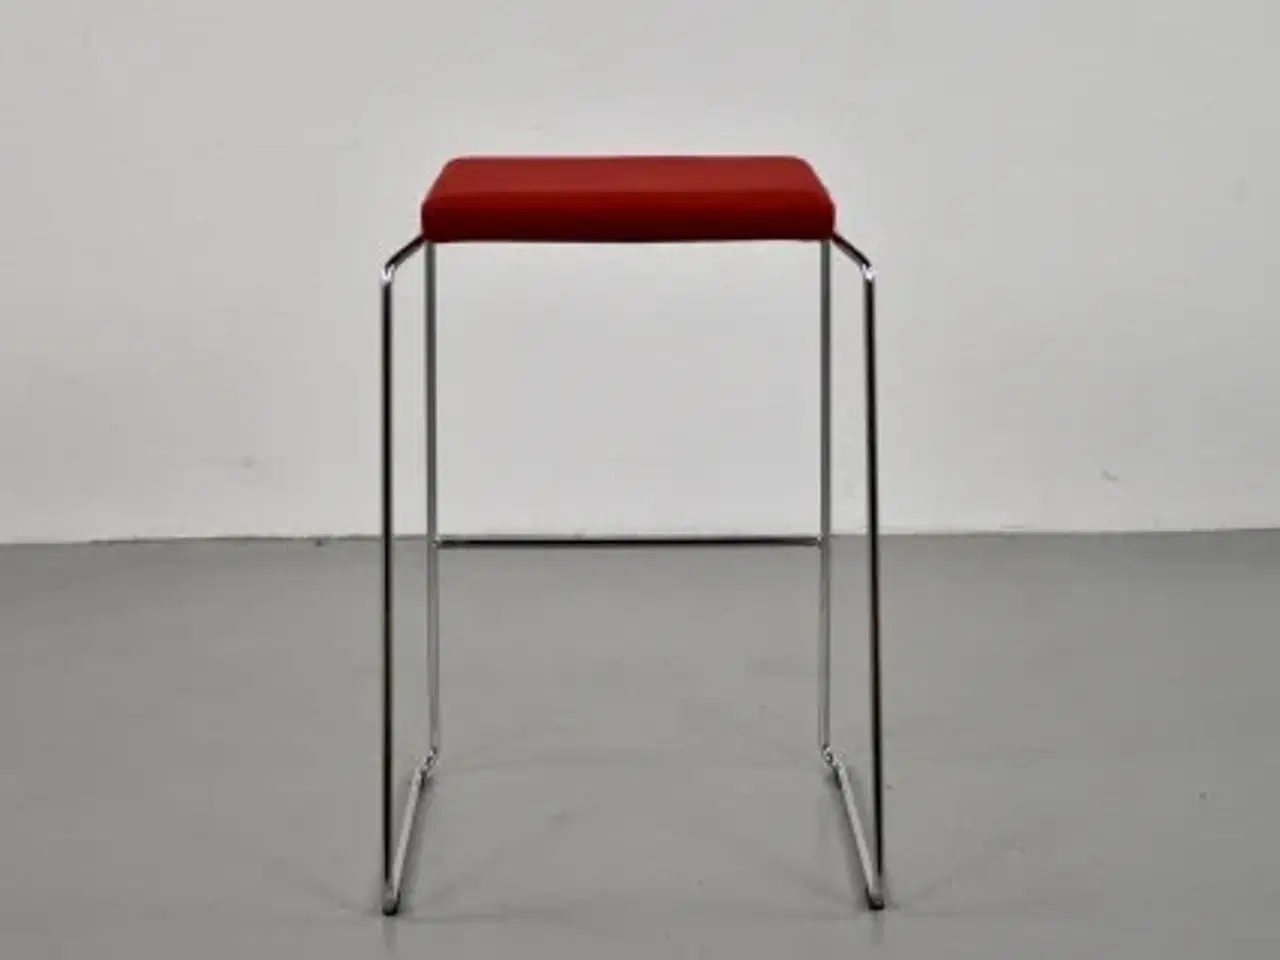 Billede 3 - Savir gate barstol med rødt polster på sædet og på krom stel